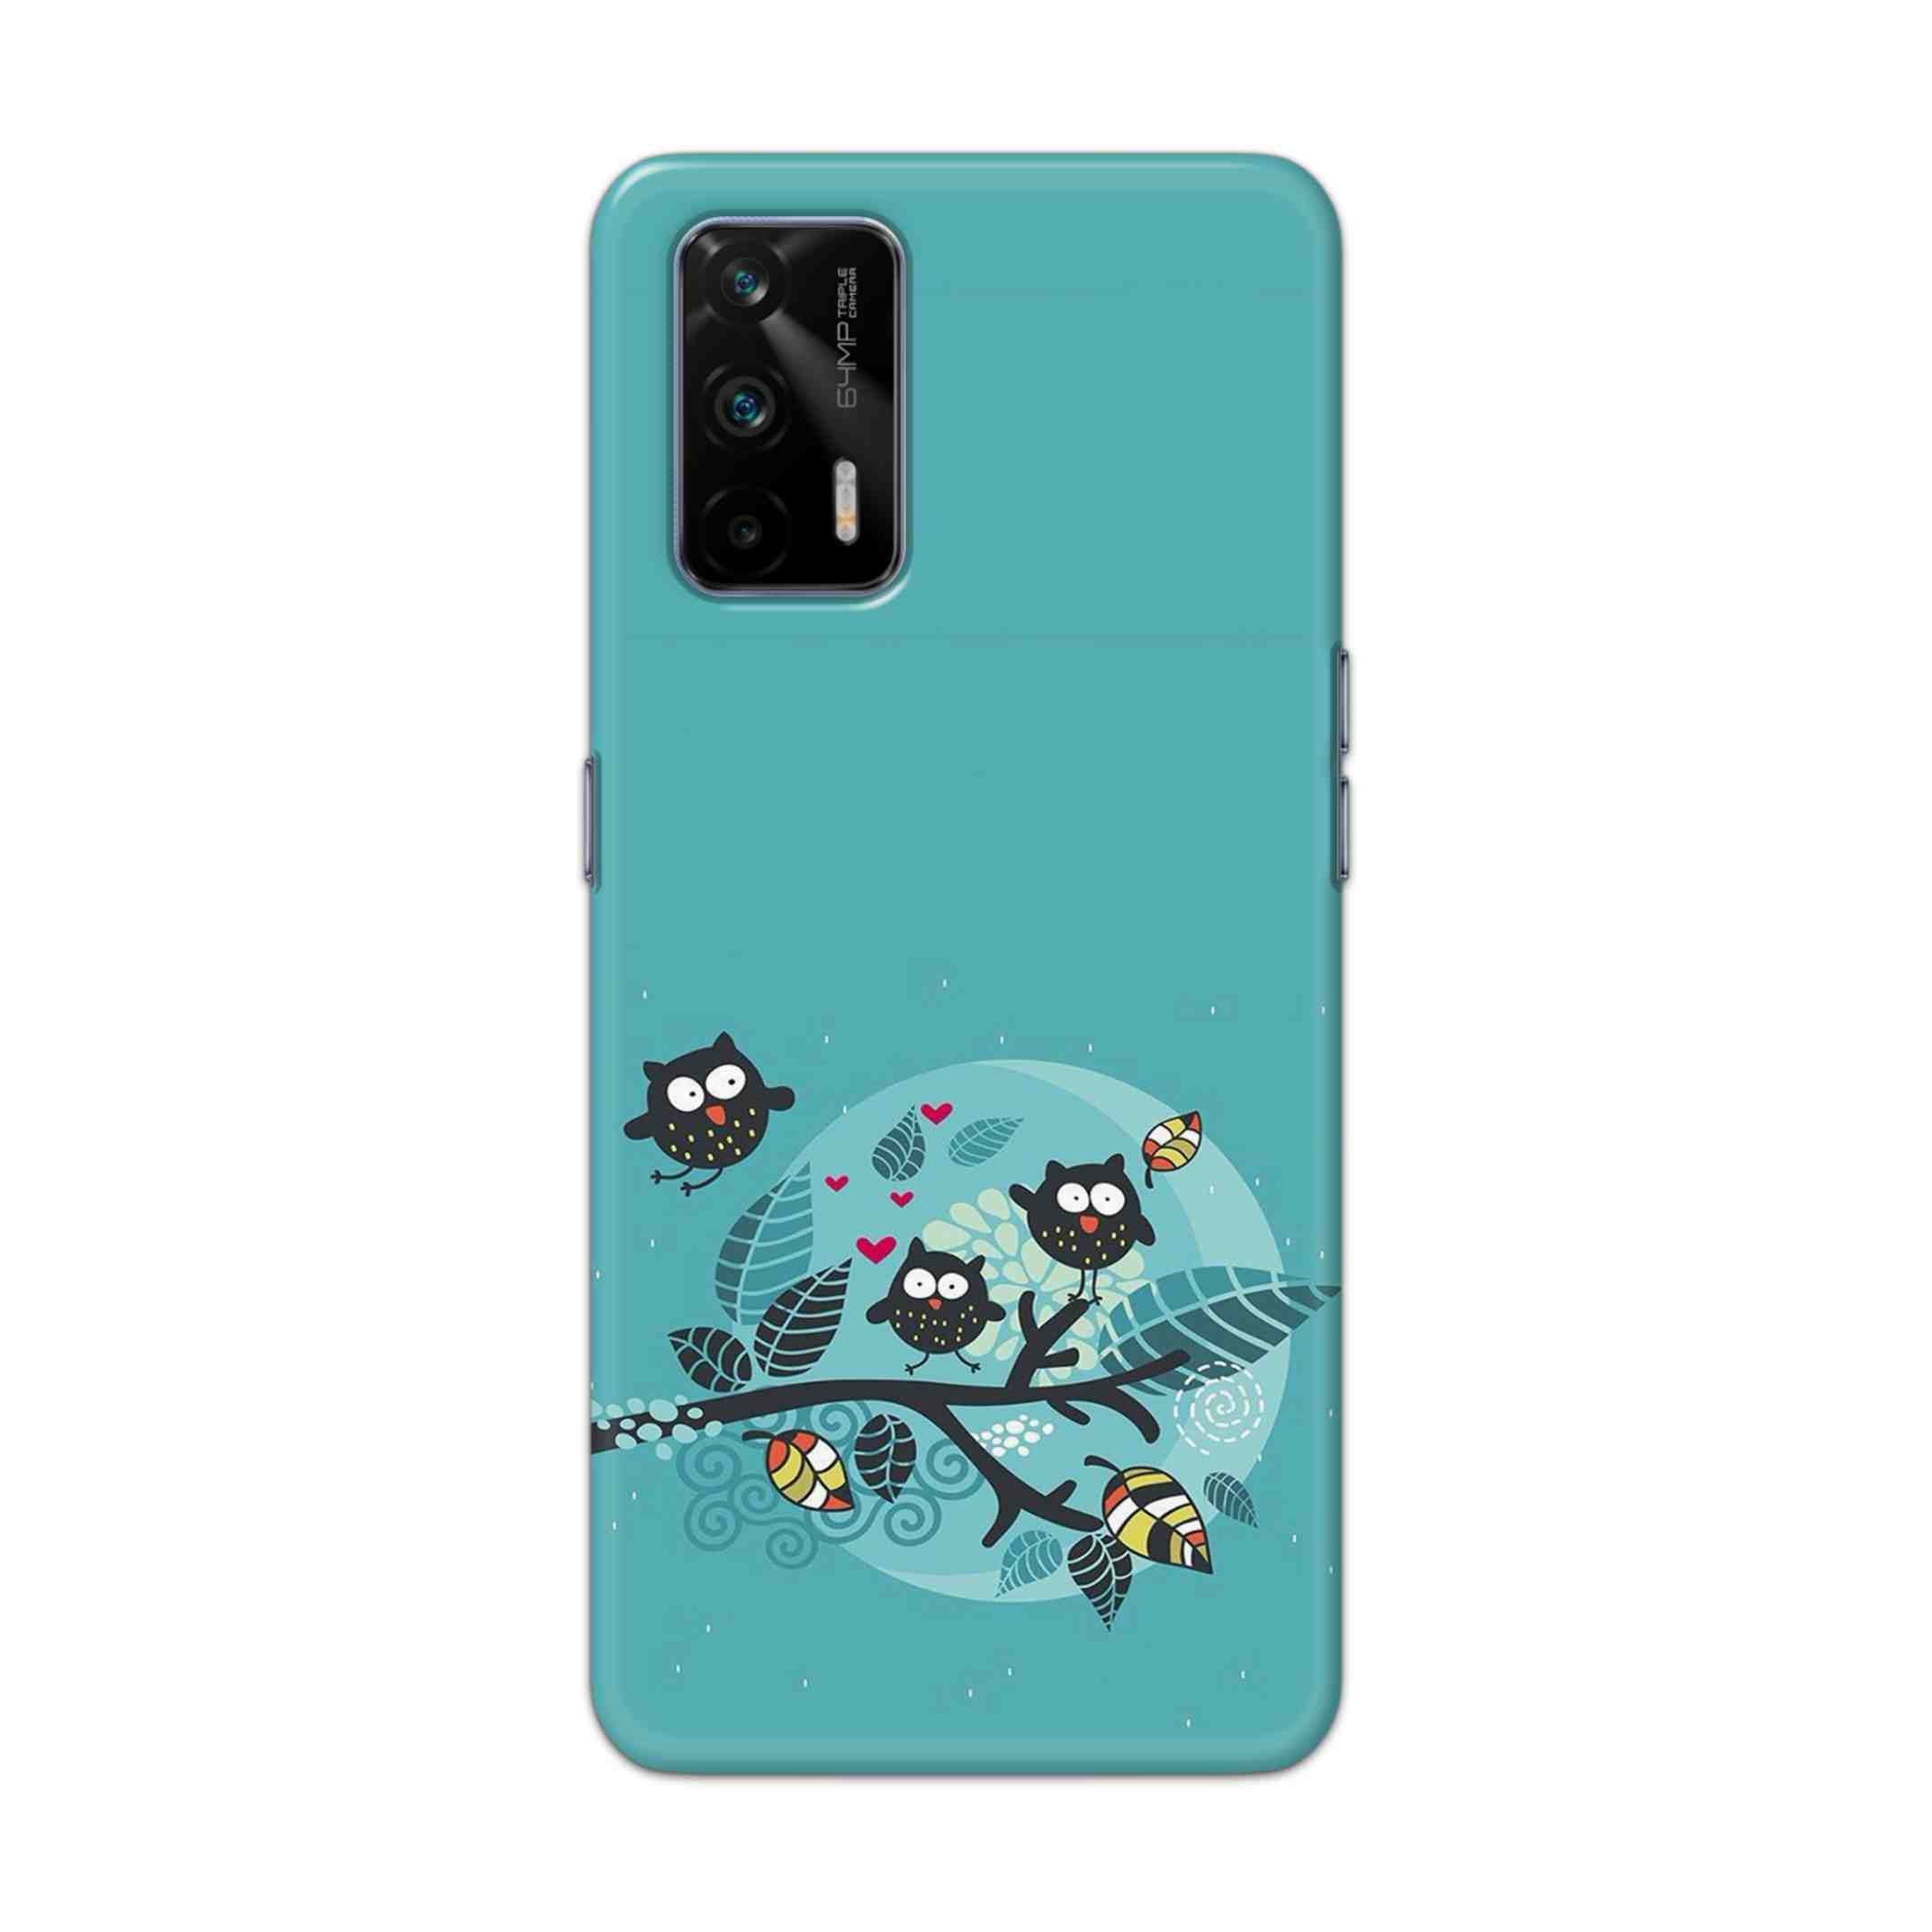 Buy Owl Hard Back Mobile Phone Case Cover For Realme GT 5G Online